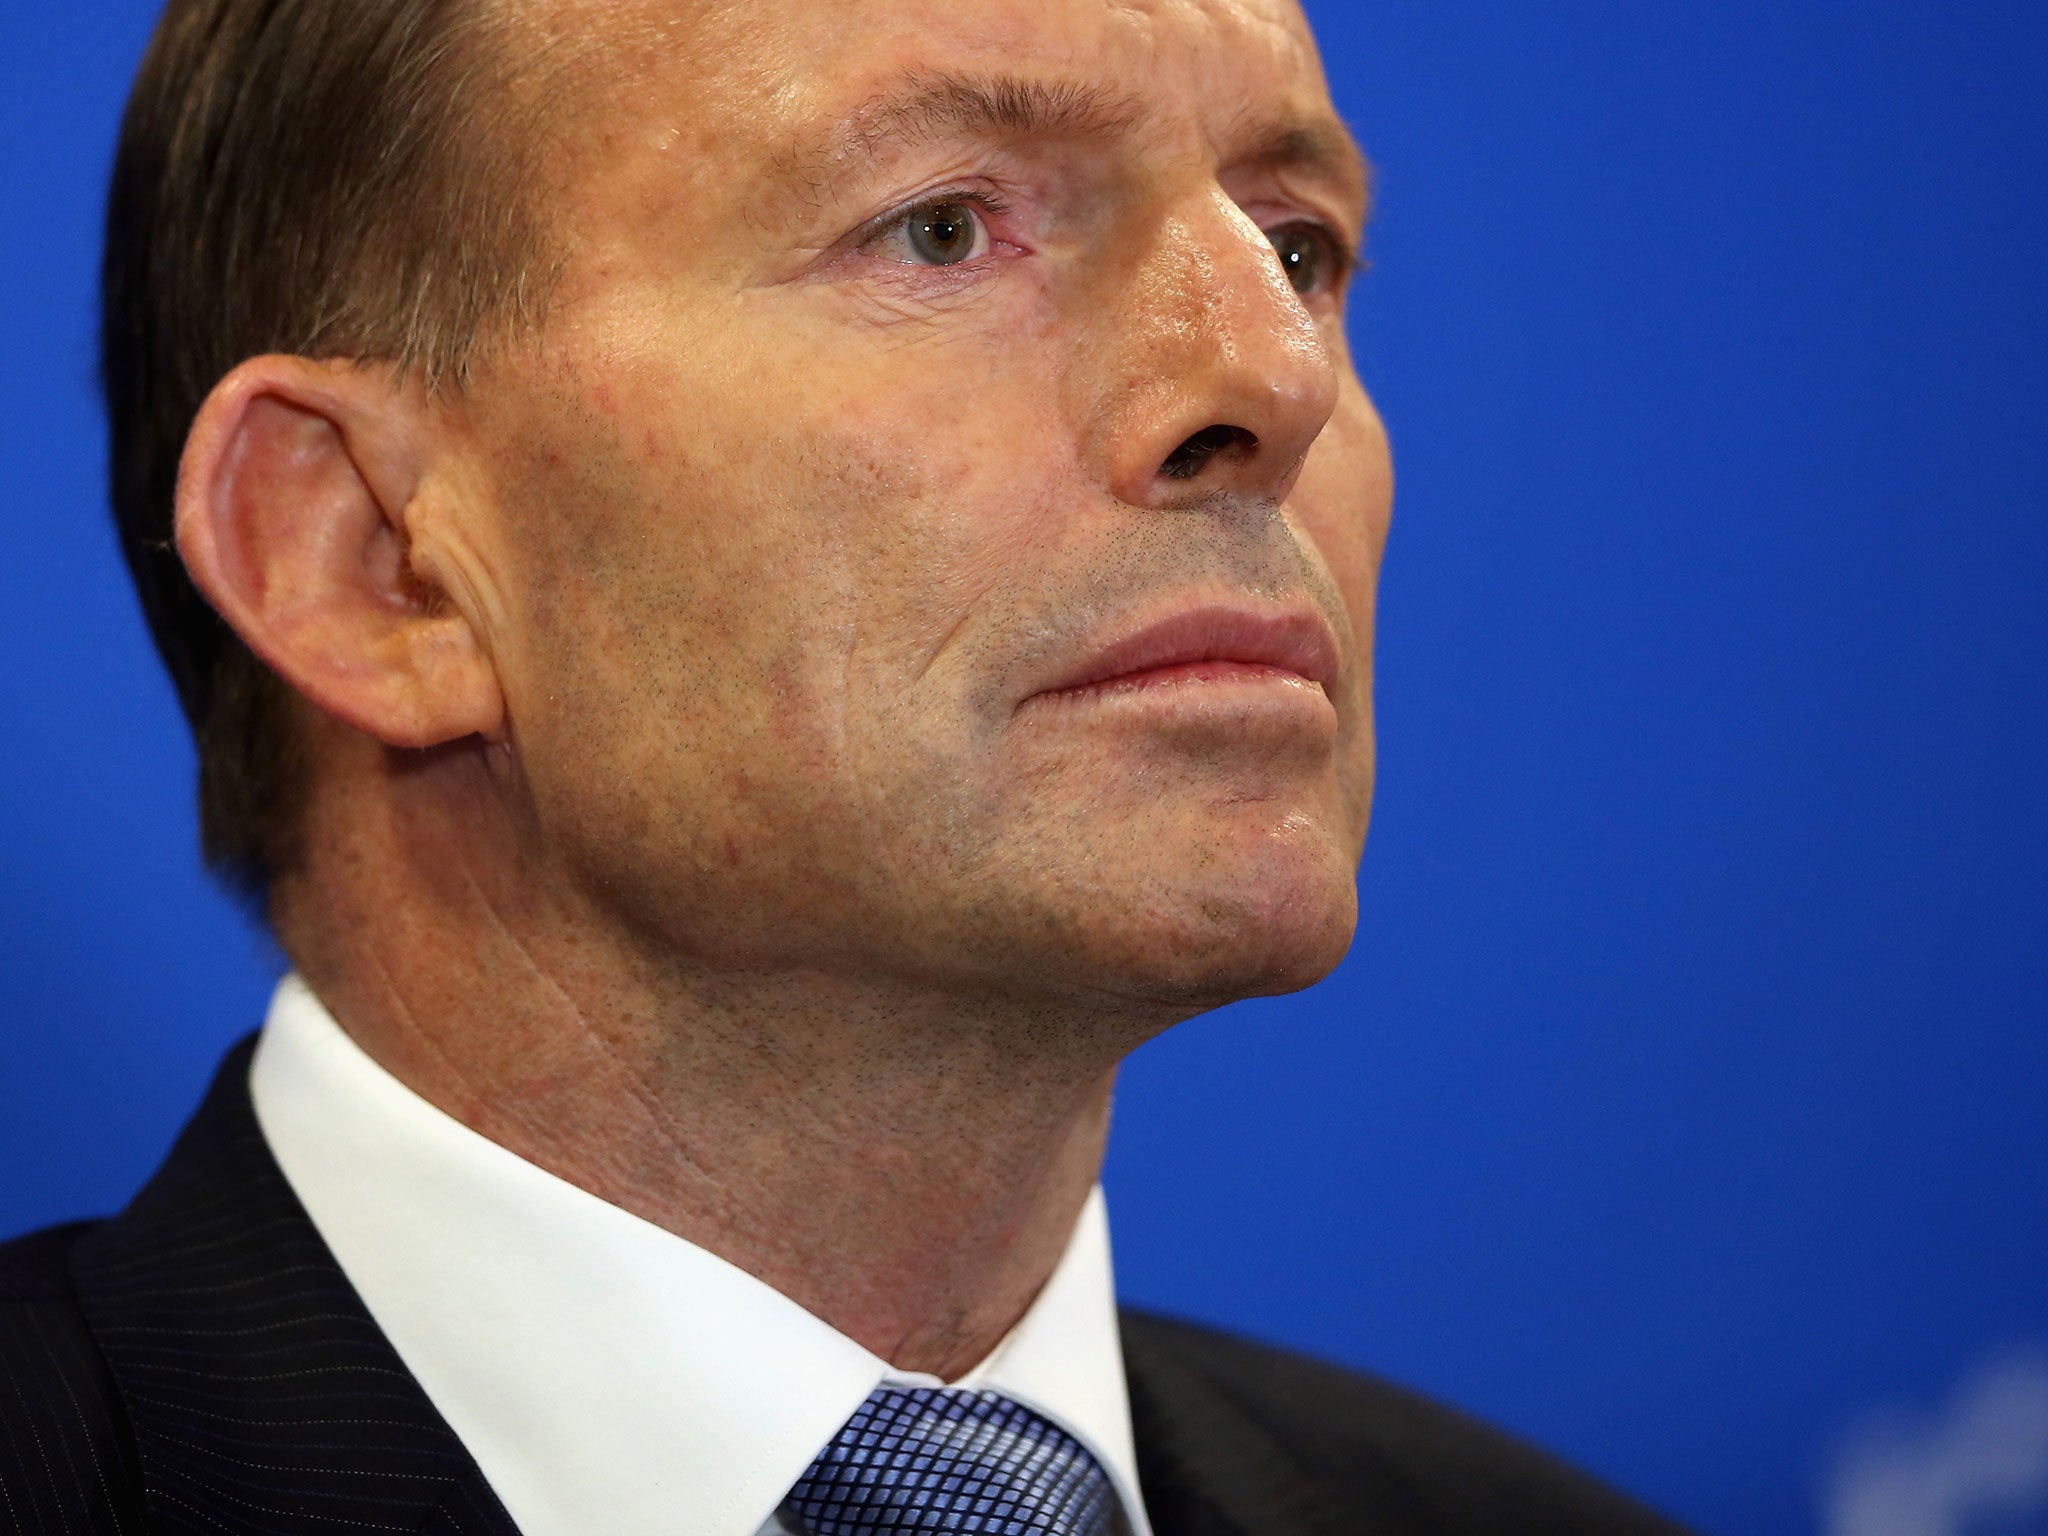 Australian Prime Minister Tony Abbott has said an Imam called him the captain of team Australia